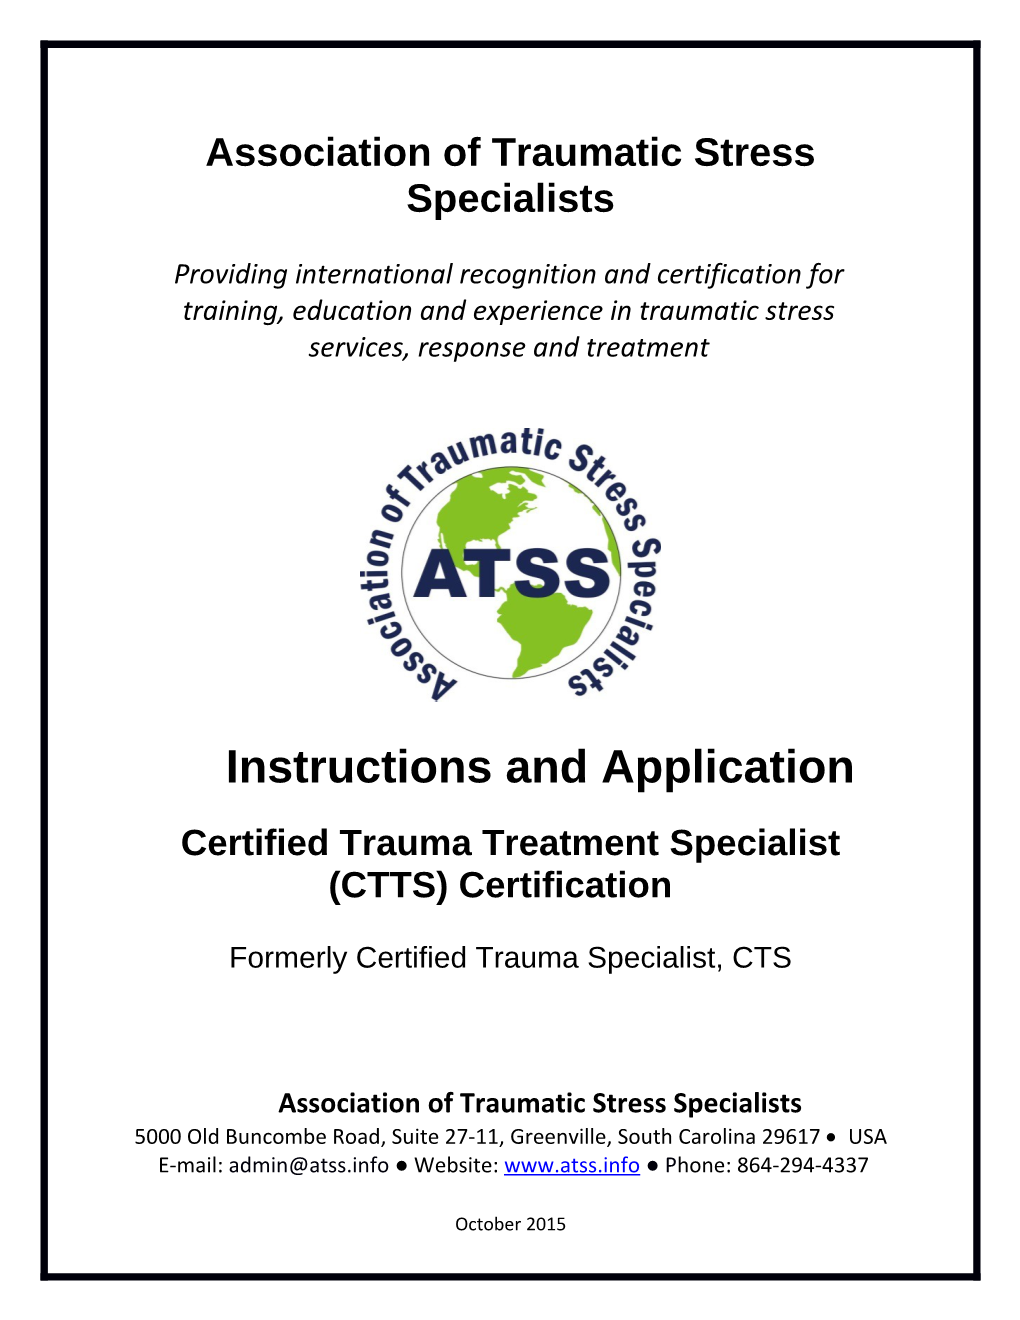 Association of Traumatic Stress Specialists